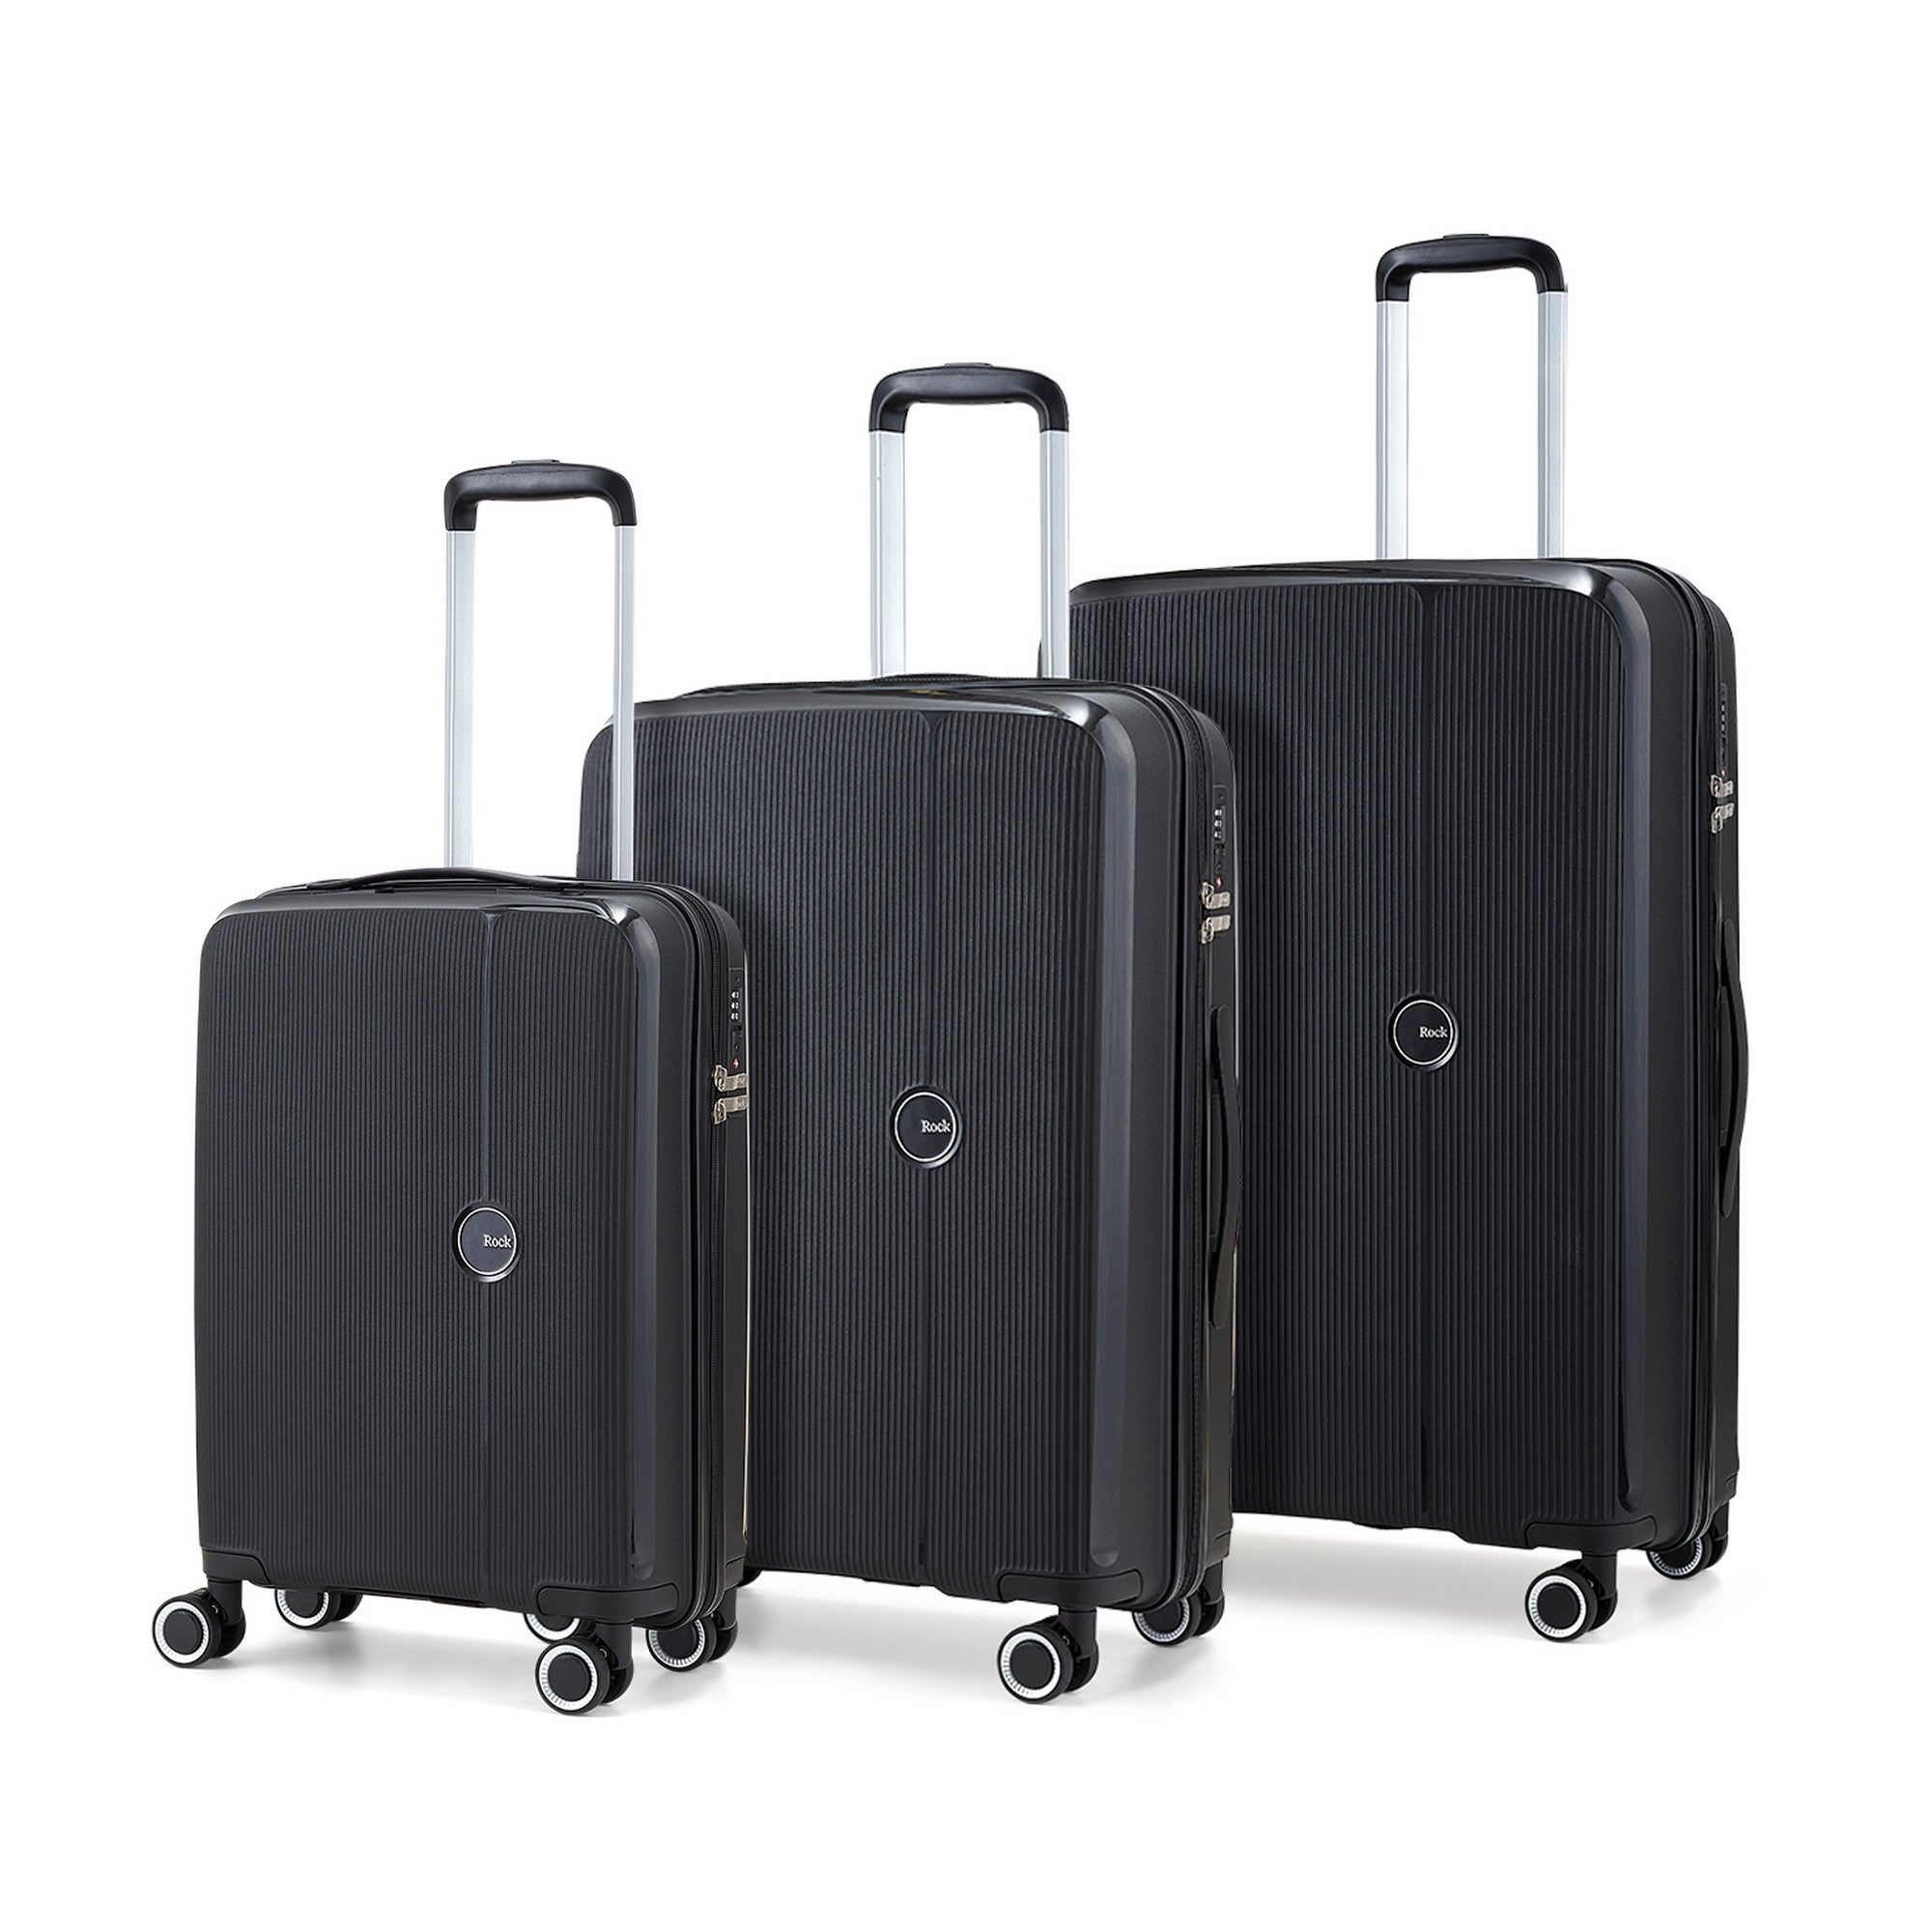 Rock Luggage Hudson Set of 3 Suitcases